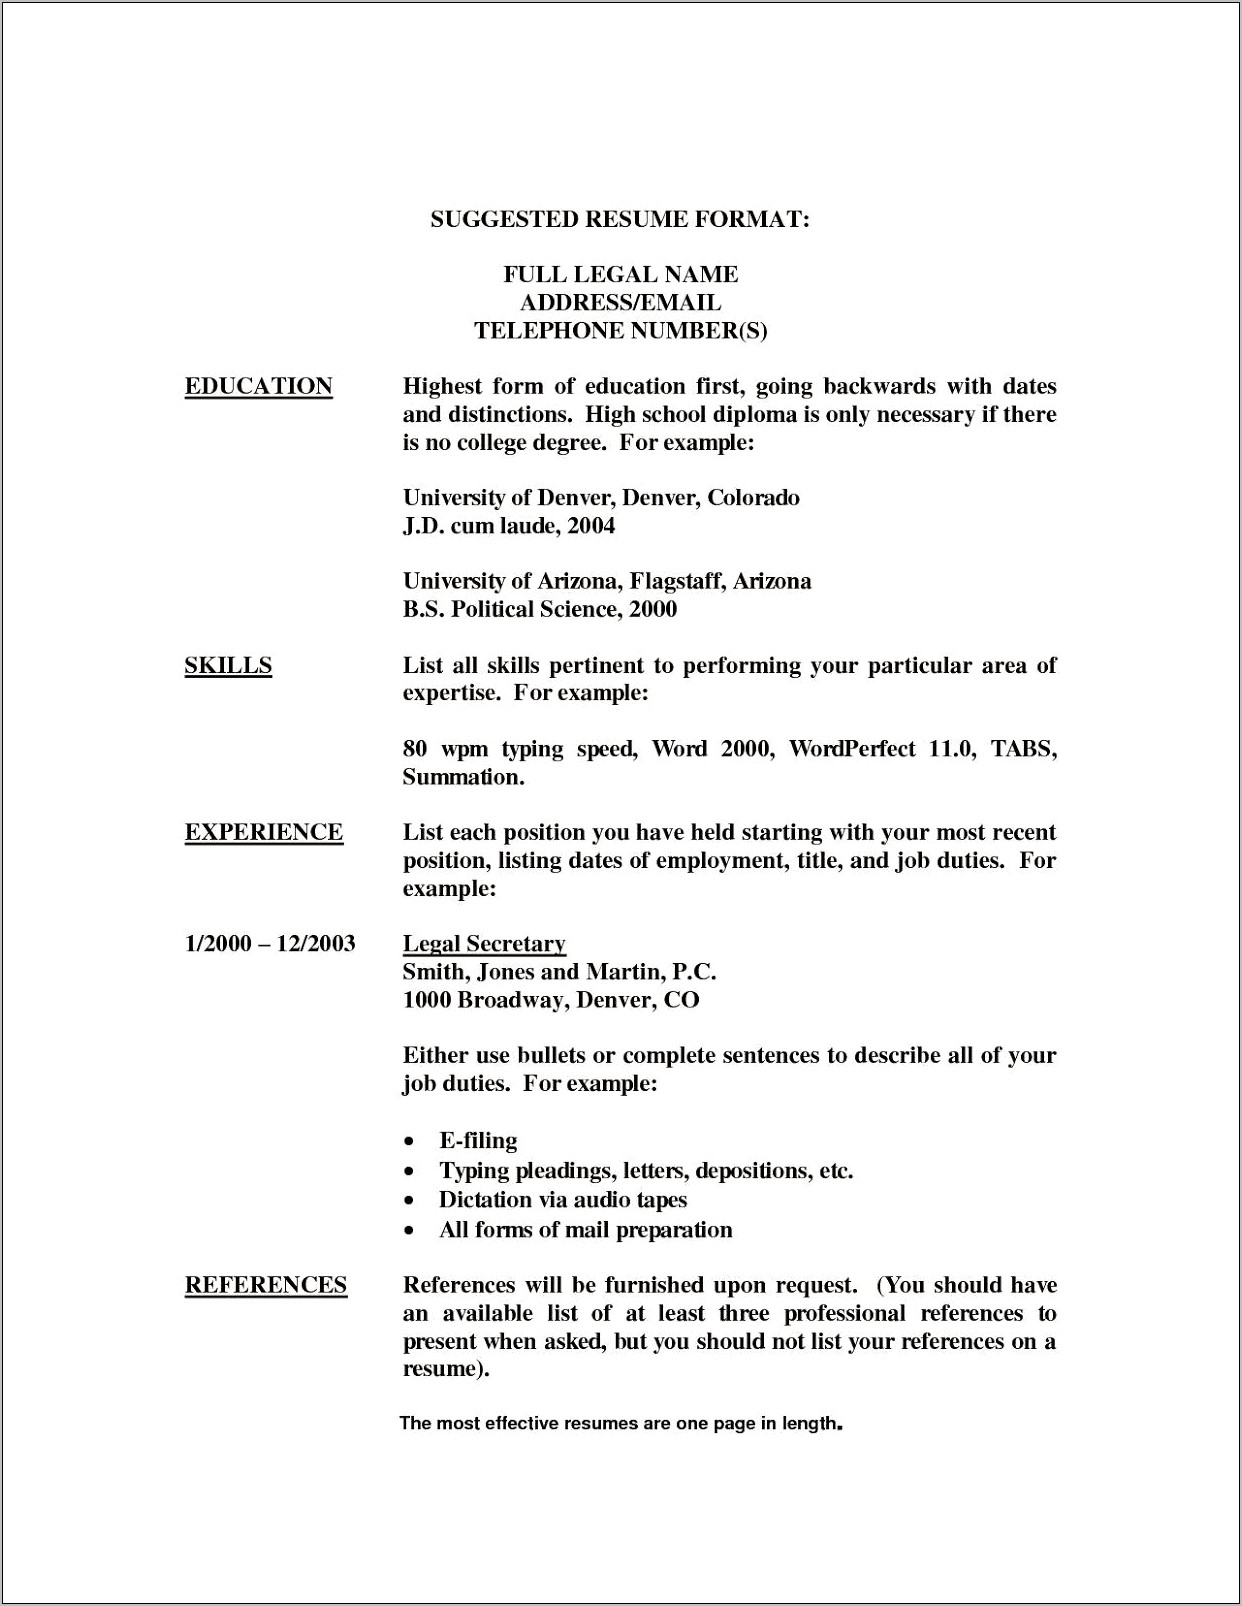 Resume Objective For Legal Secretary 1